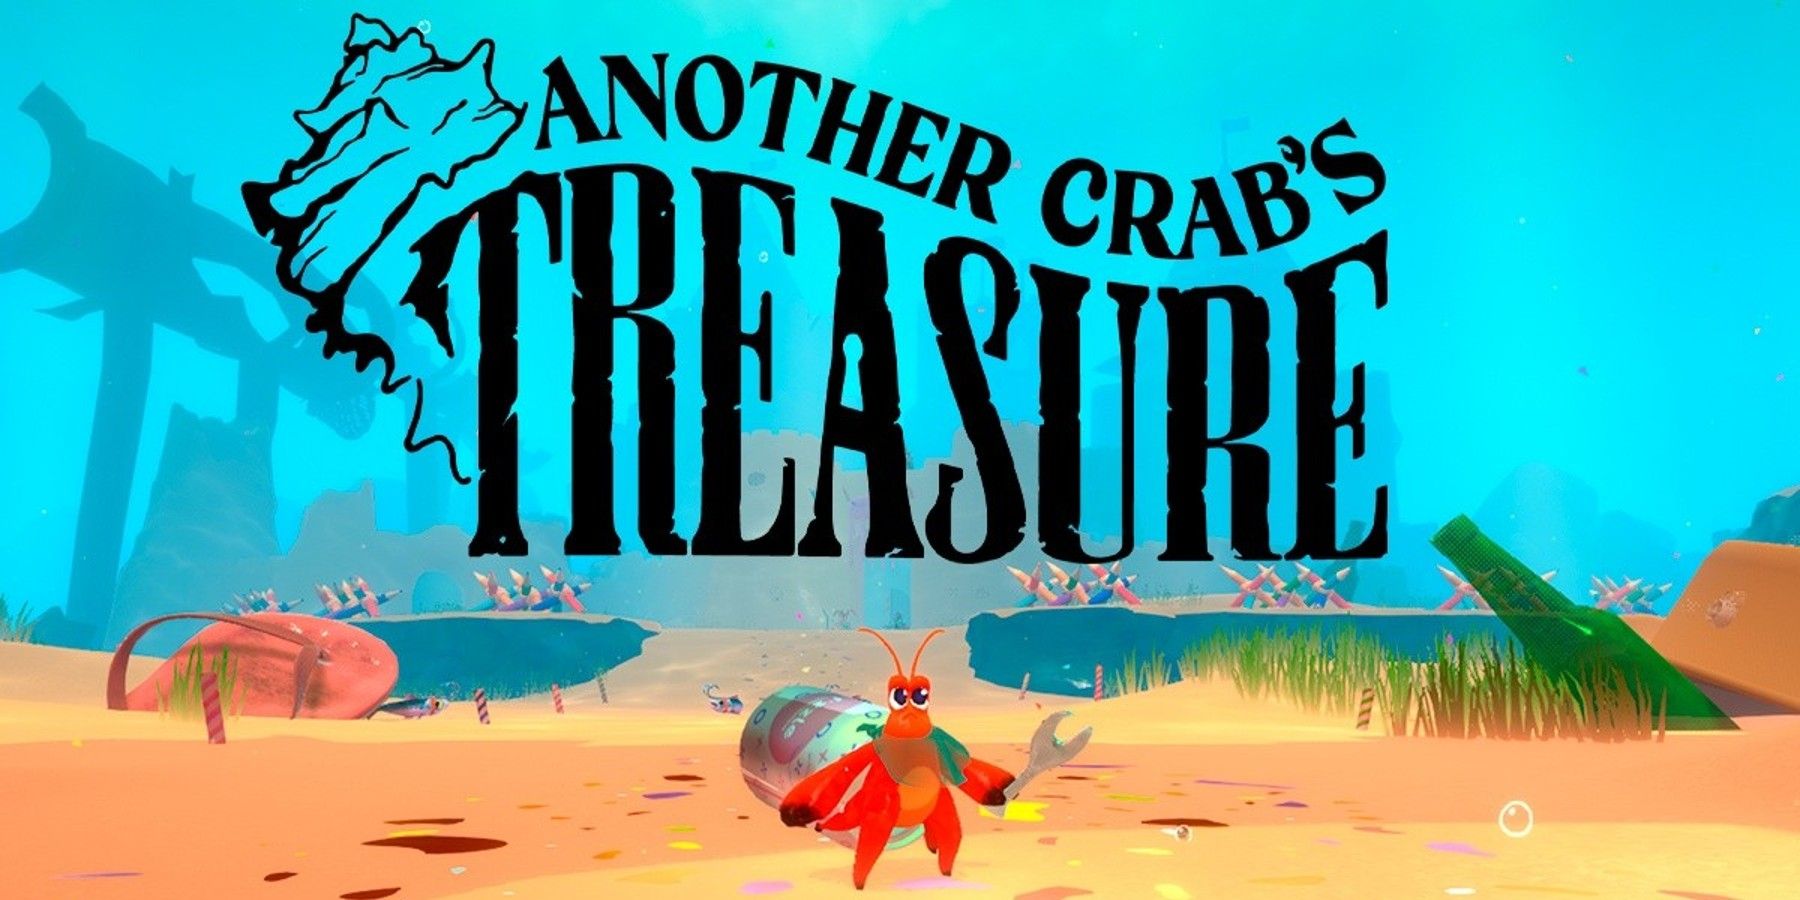 another-crabs-treasure-soulslike